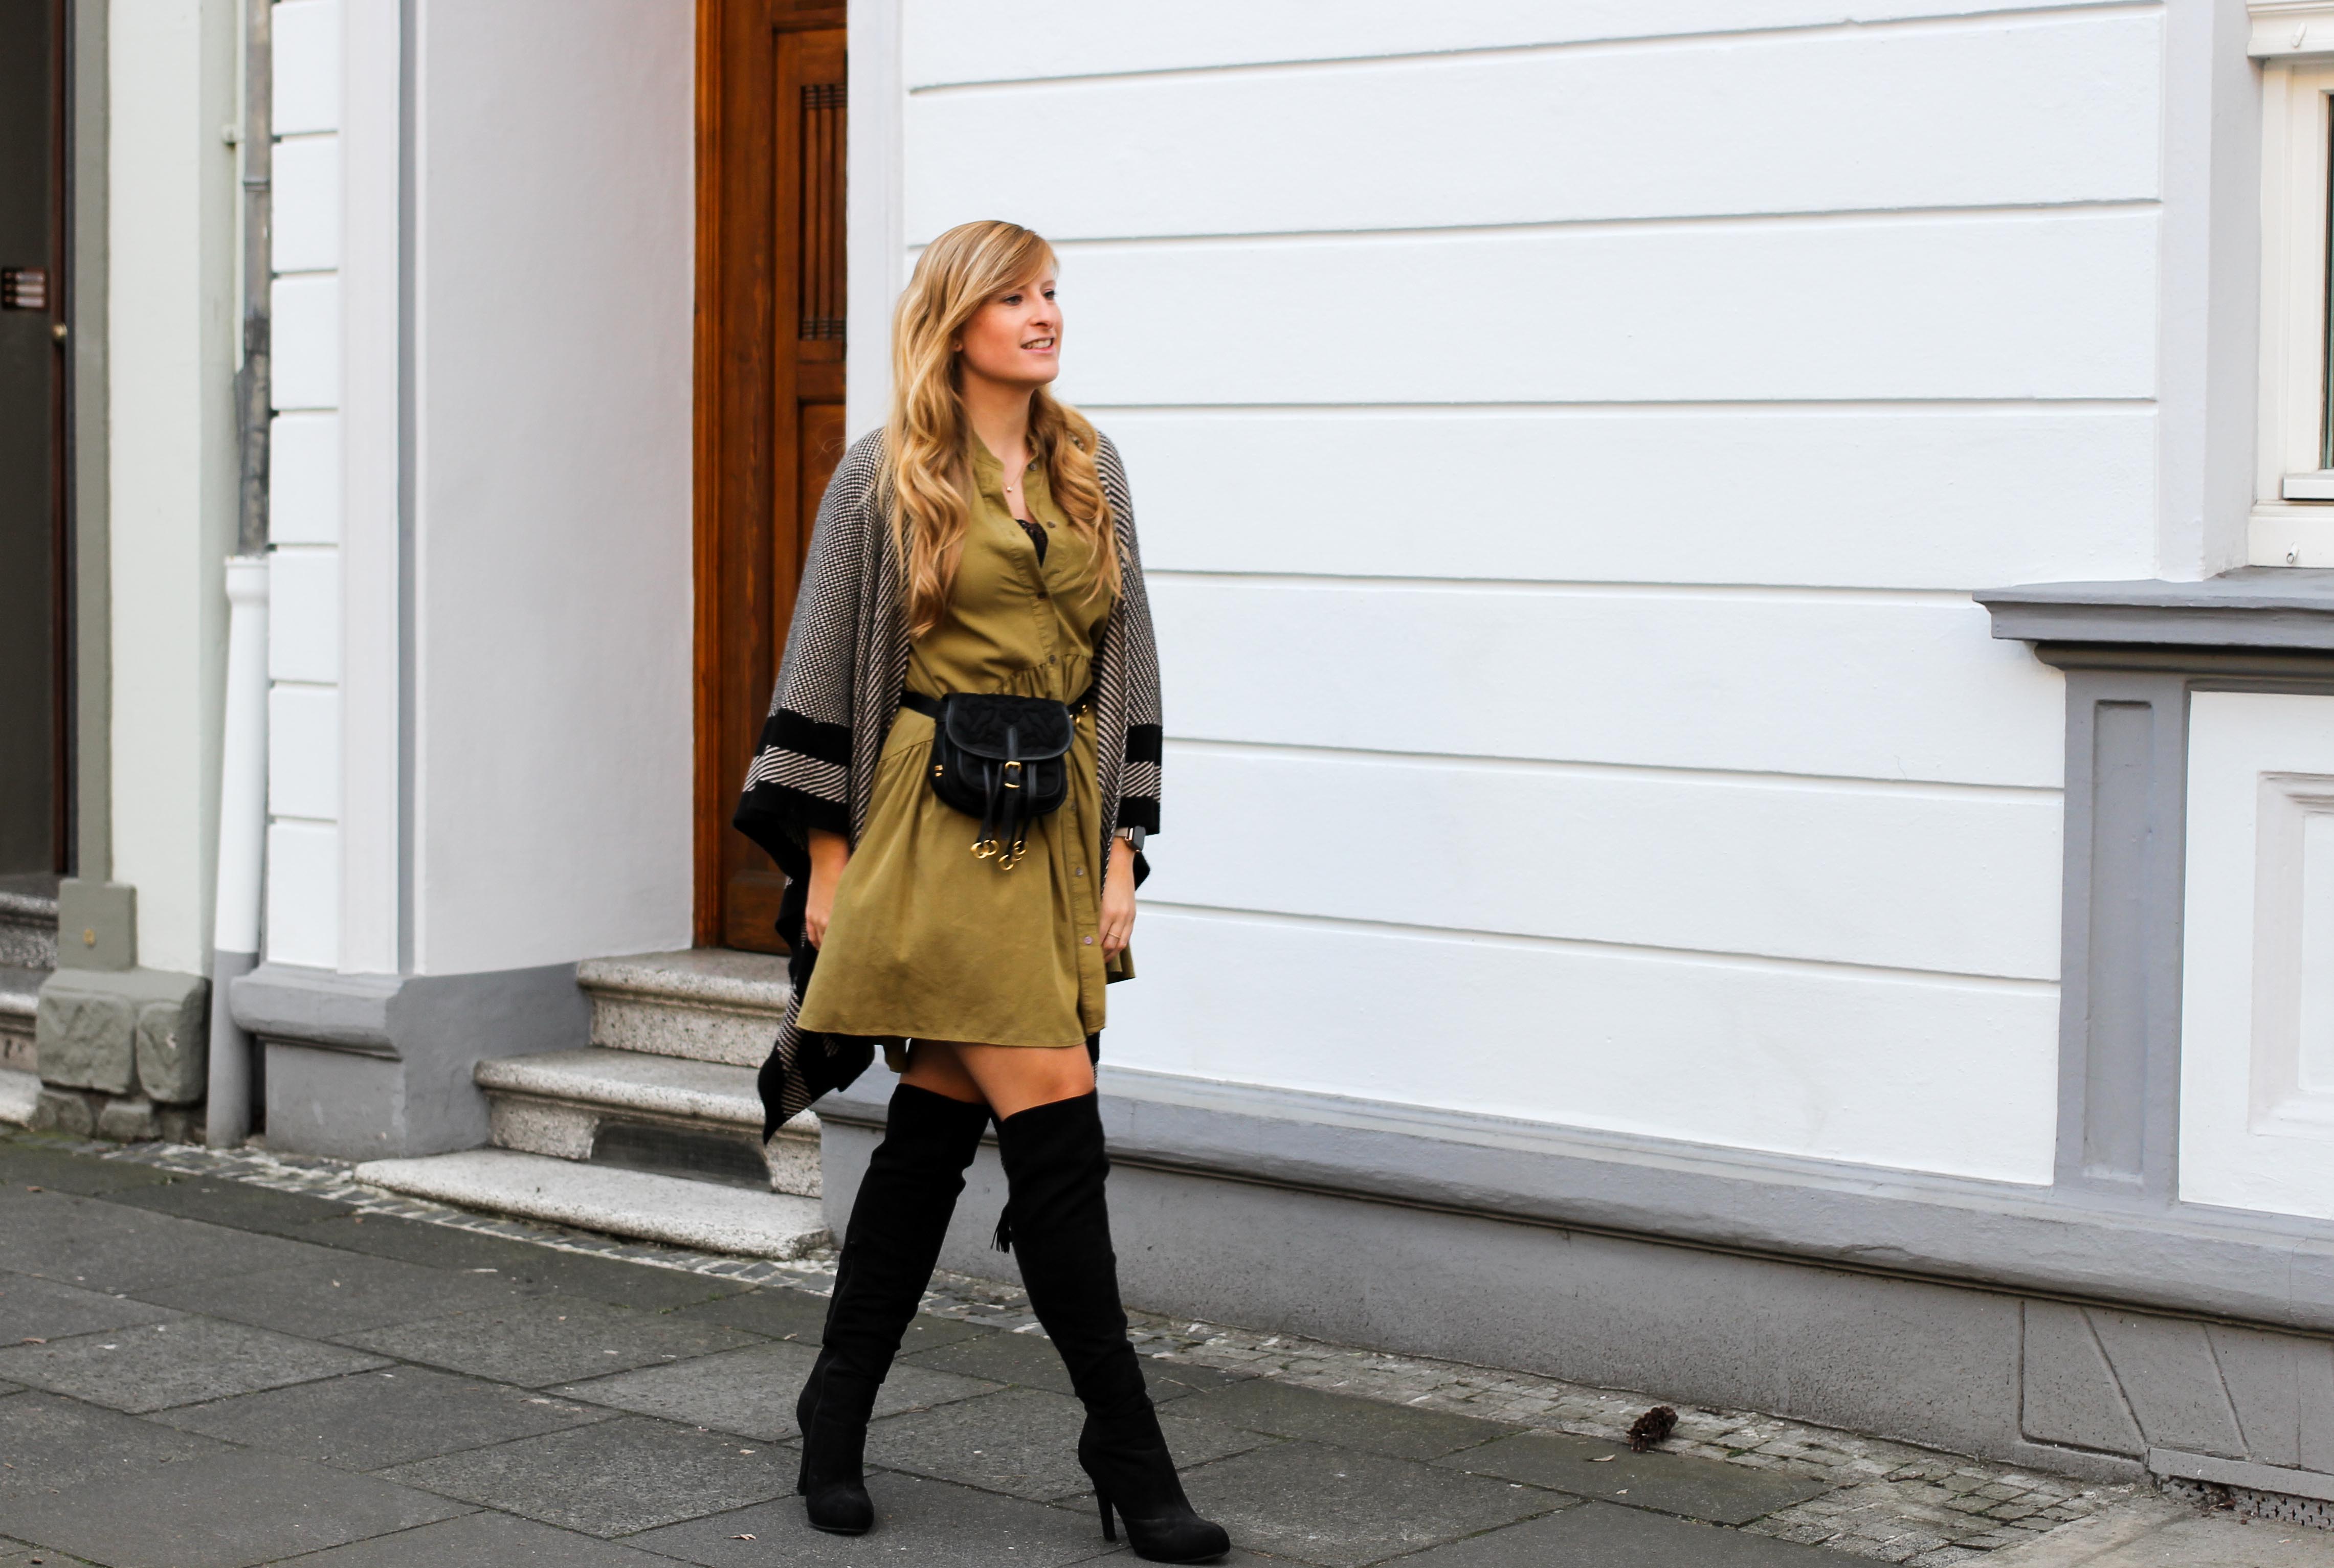 Overknees Gürteltasche Prada Poncho Second-Hand Kleidung kombinieren Streetstyle Outfit Bonn Zara Kleid grün Frühling 2019 5